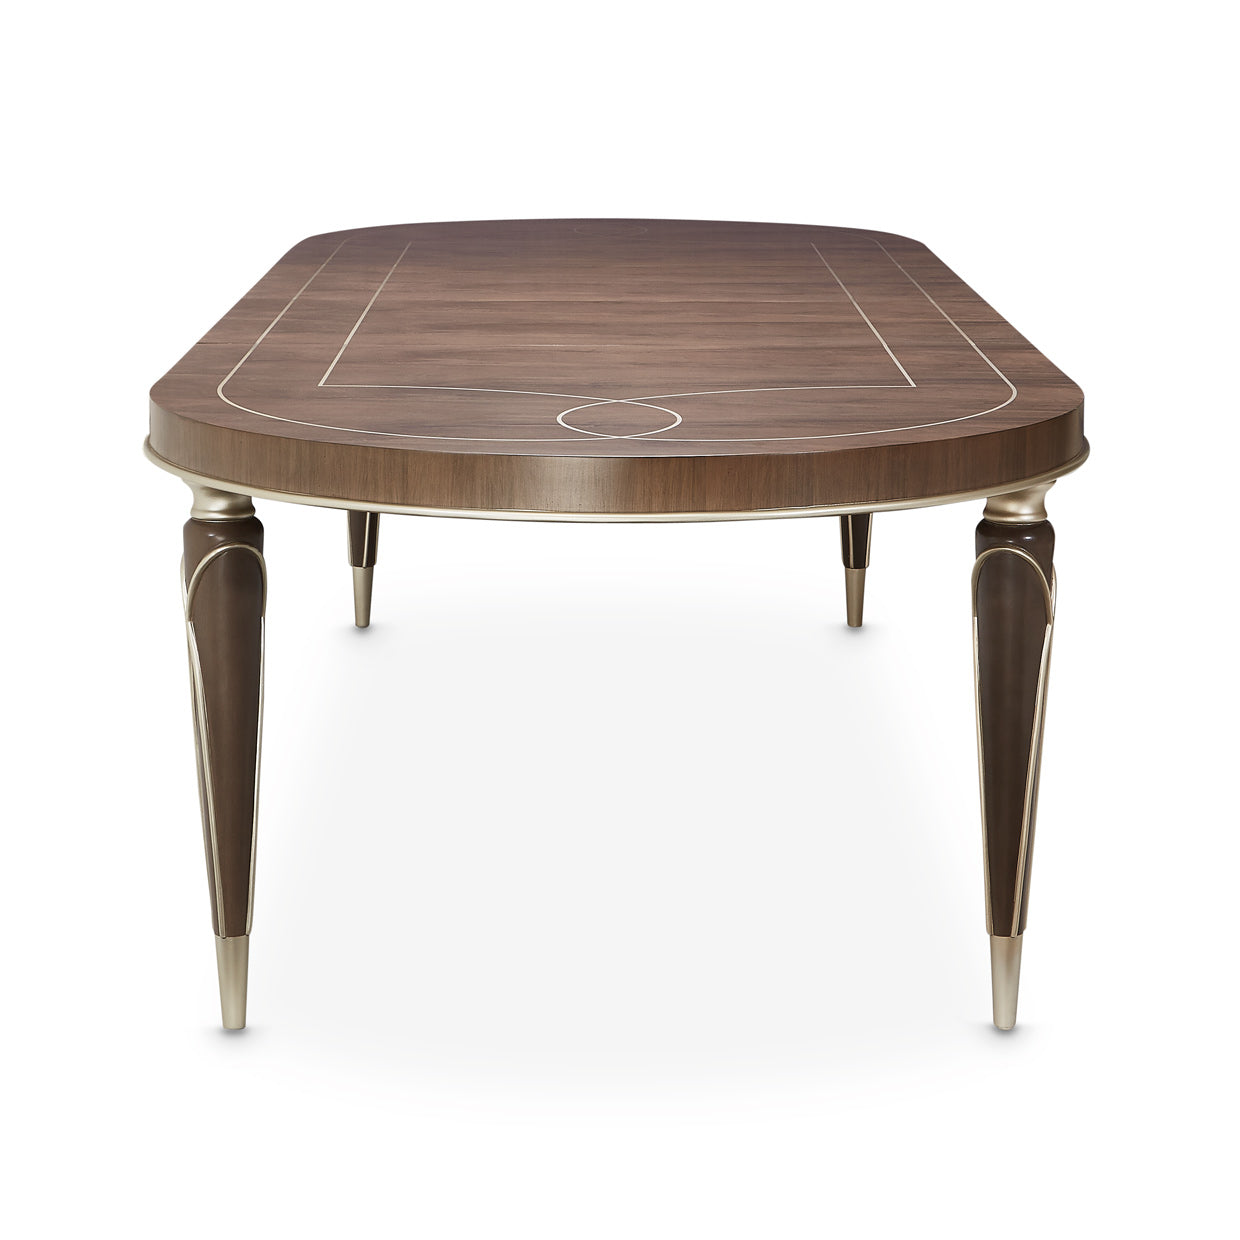 VILLA CHERIE HAZELNUT 4 Leg Oval Dining Table (Includes: 2 X 22 Leaves) - Dream art Gallery